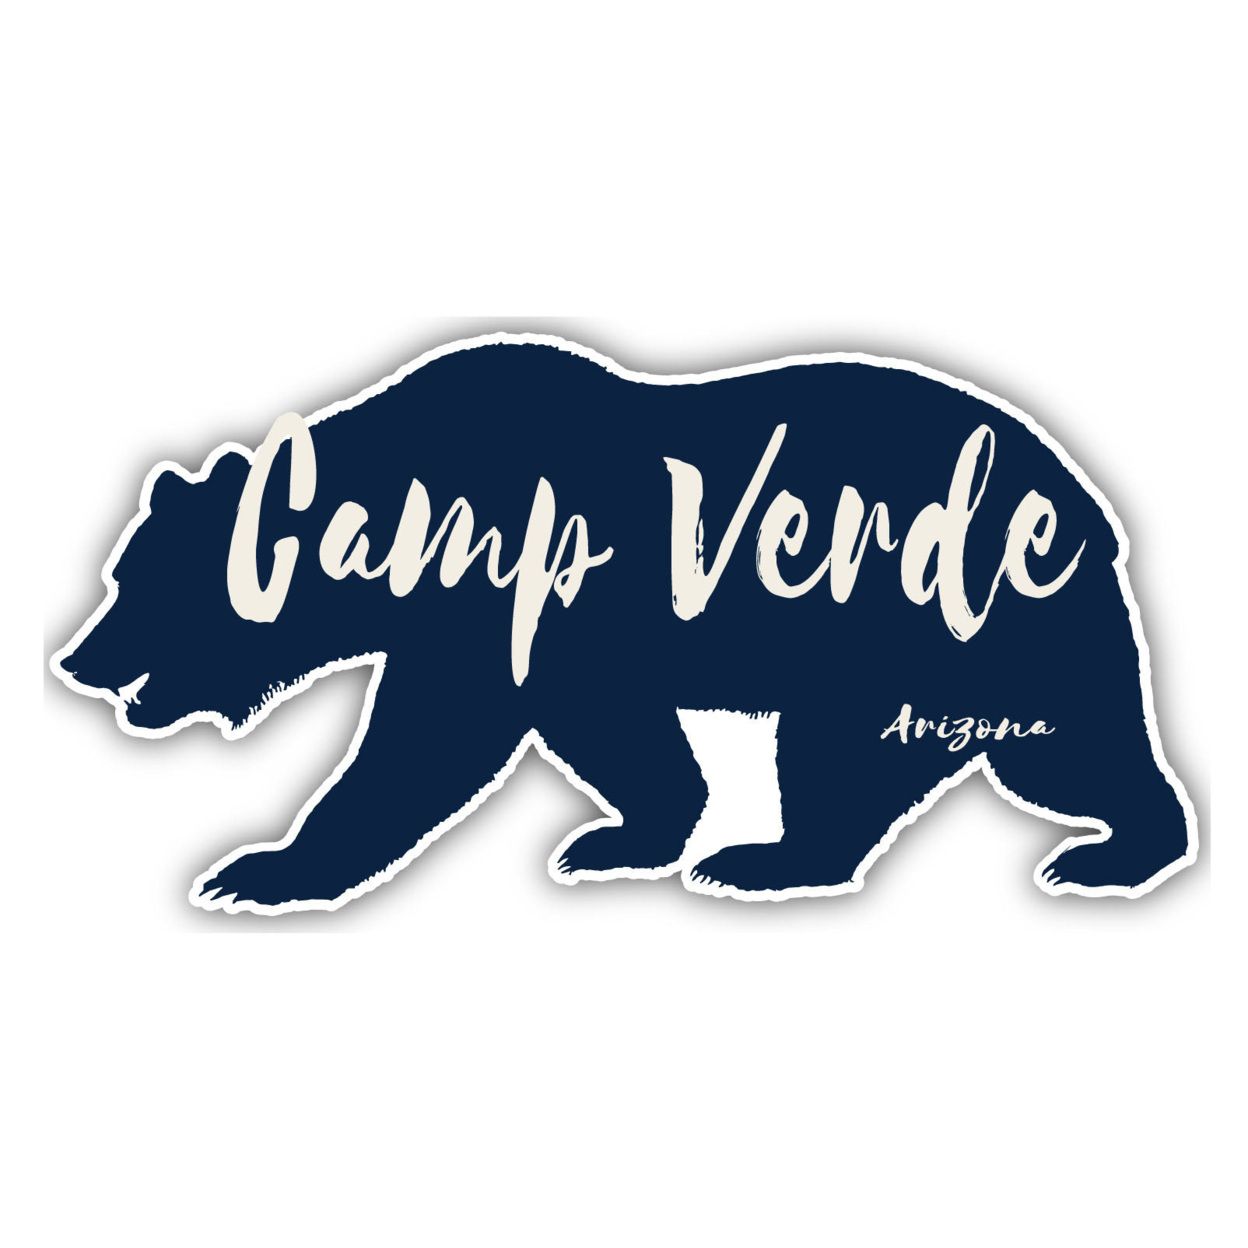 Camp Verde Arizona Souvenir Decorative Stickers (Choose Theme And Size) - 4-Pack, 10-Inch, Bear